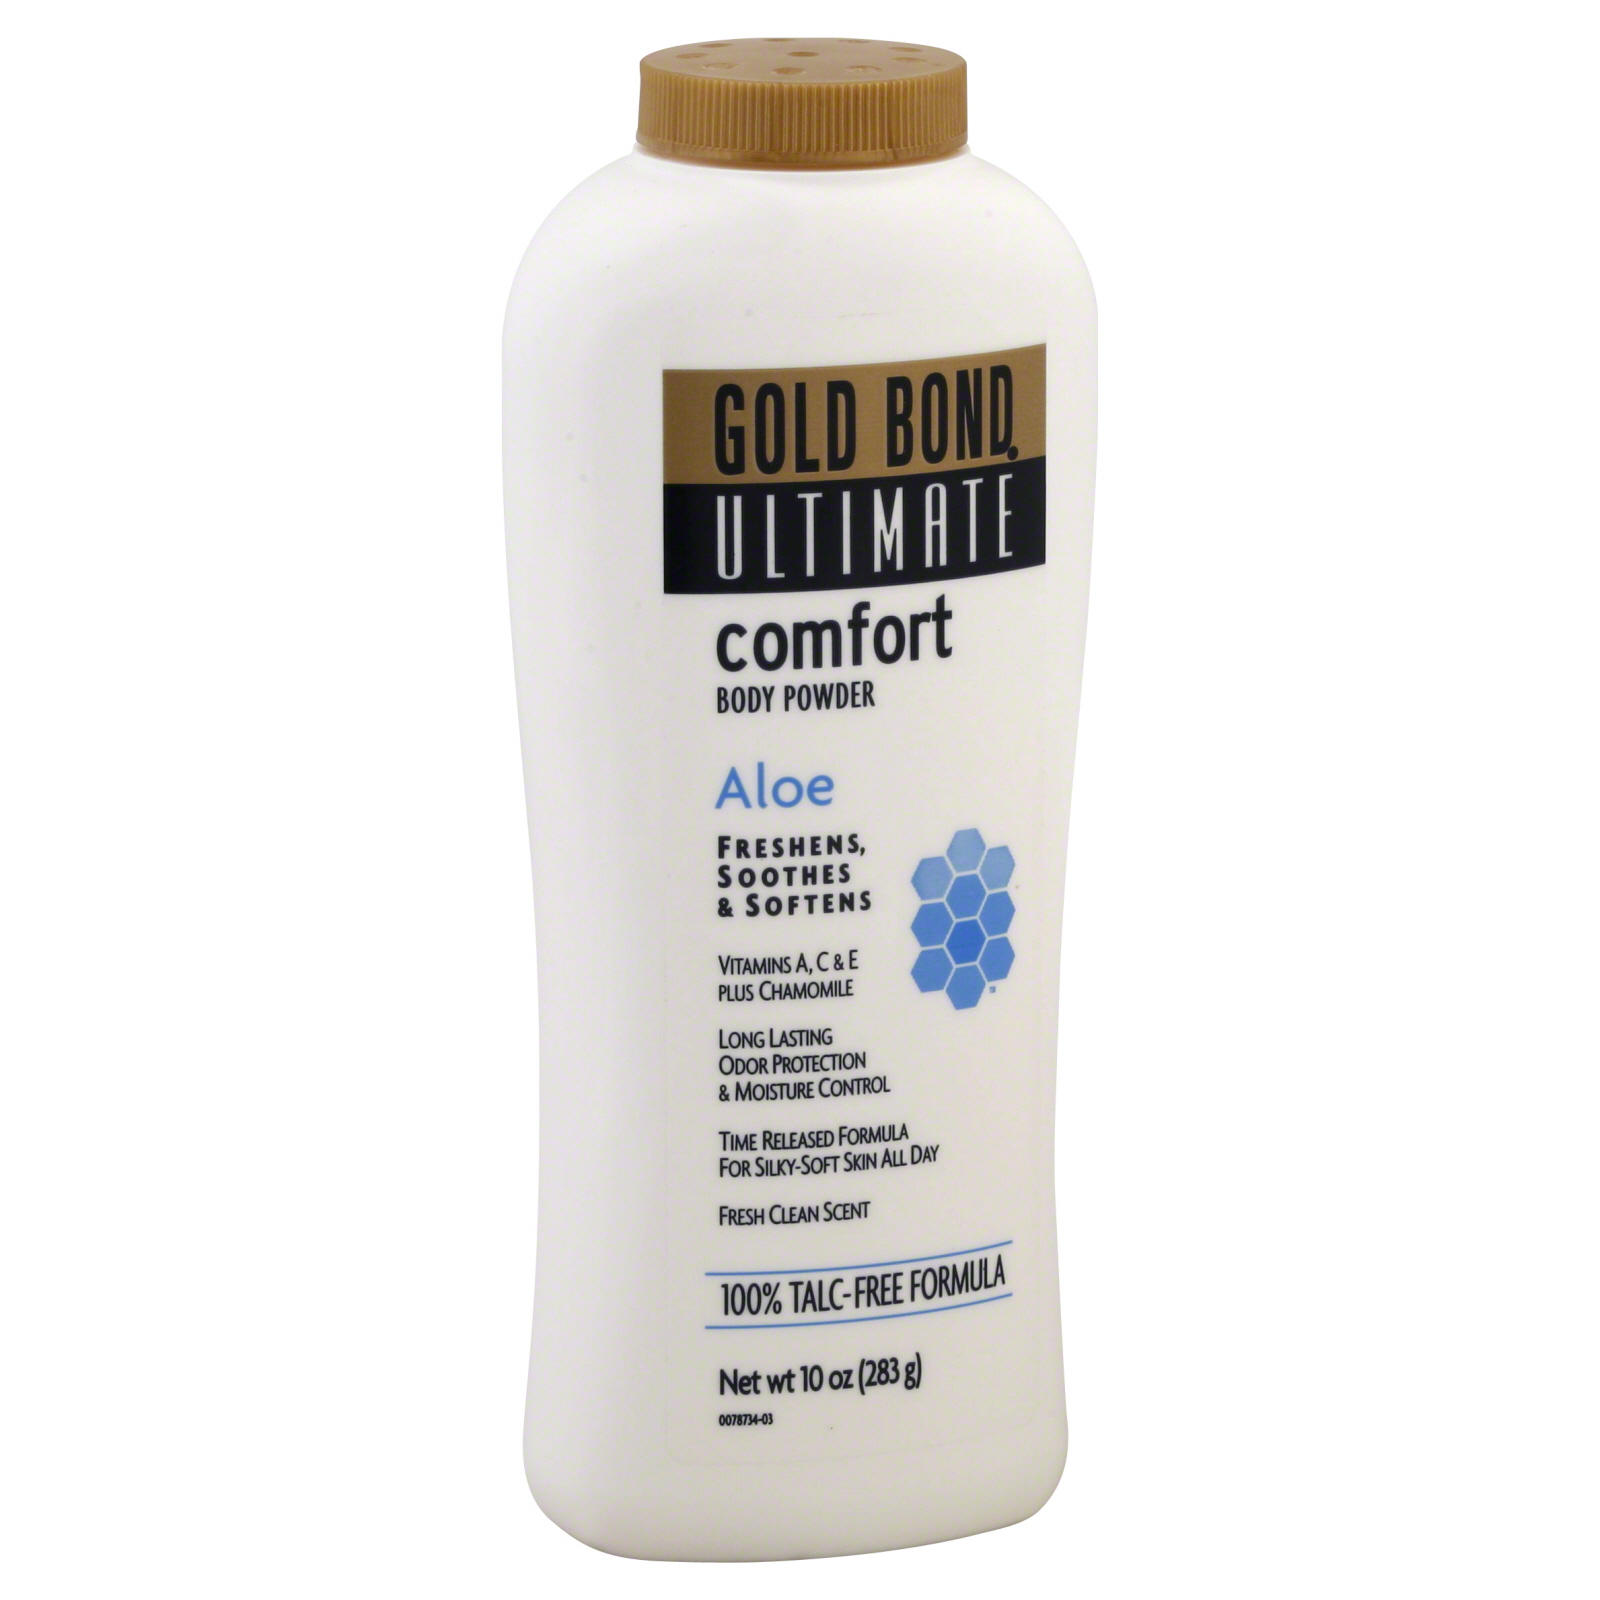 Gold Bond Ultimate Body Powder, Comfort, Aloe, 10 oz (283 g)